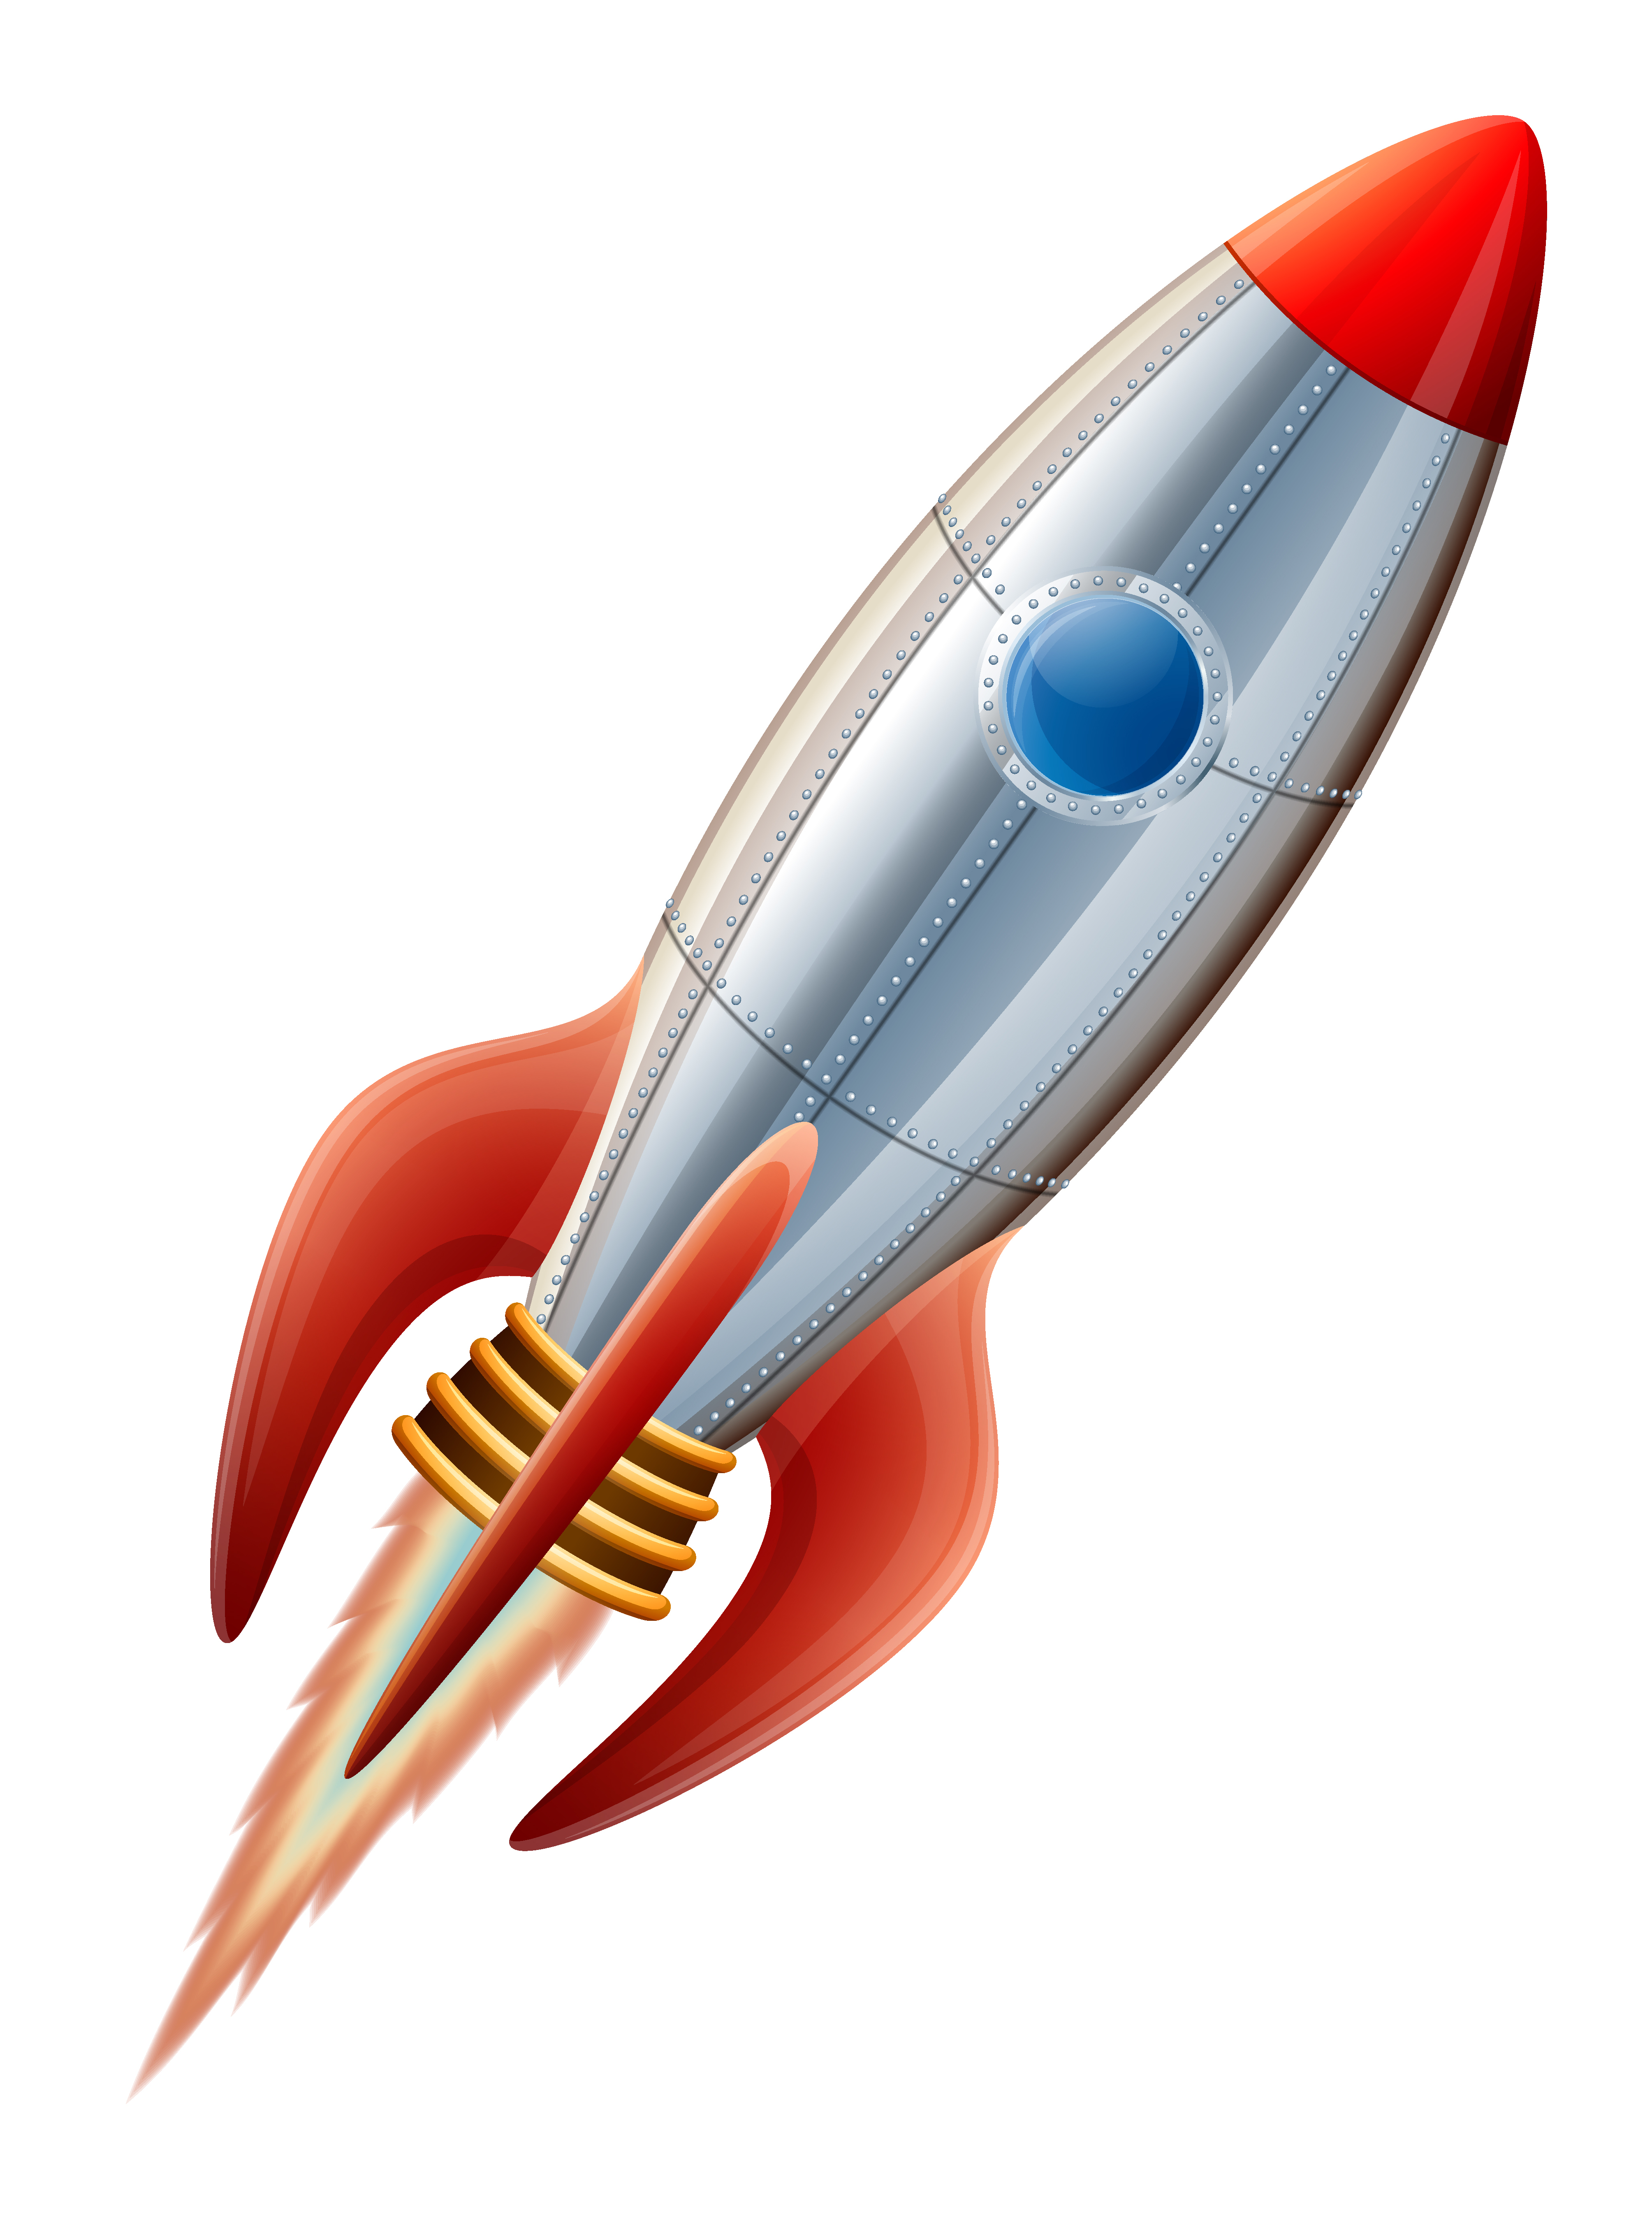 Rocket Ship Images Clip Art : Rocket Ship Clip Art Free Cartoon ...